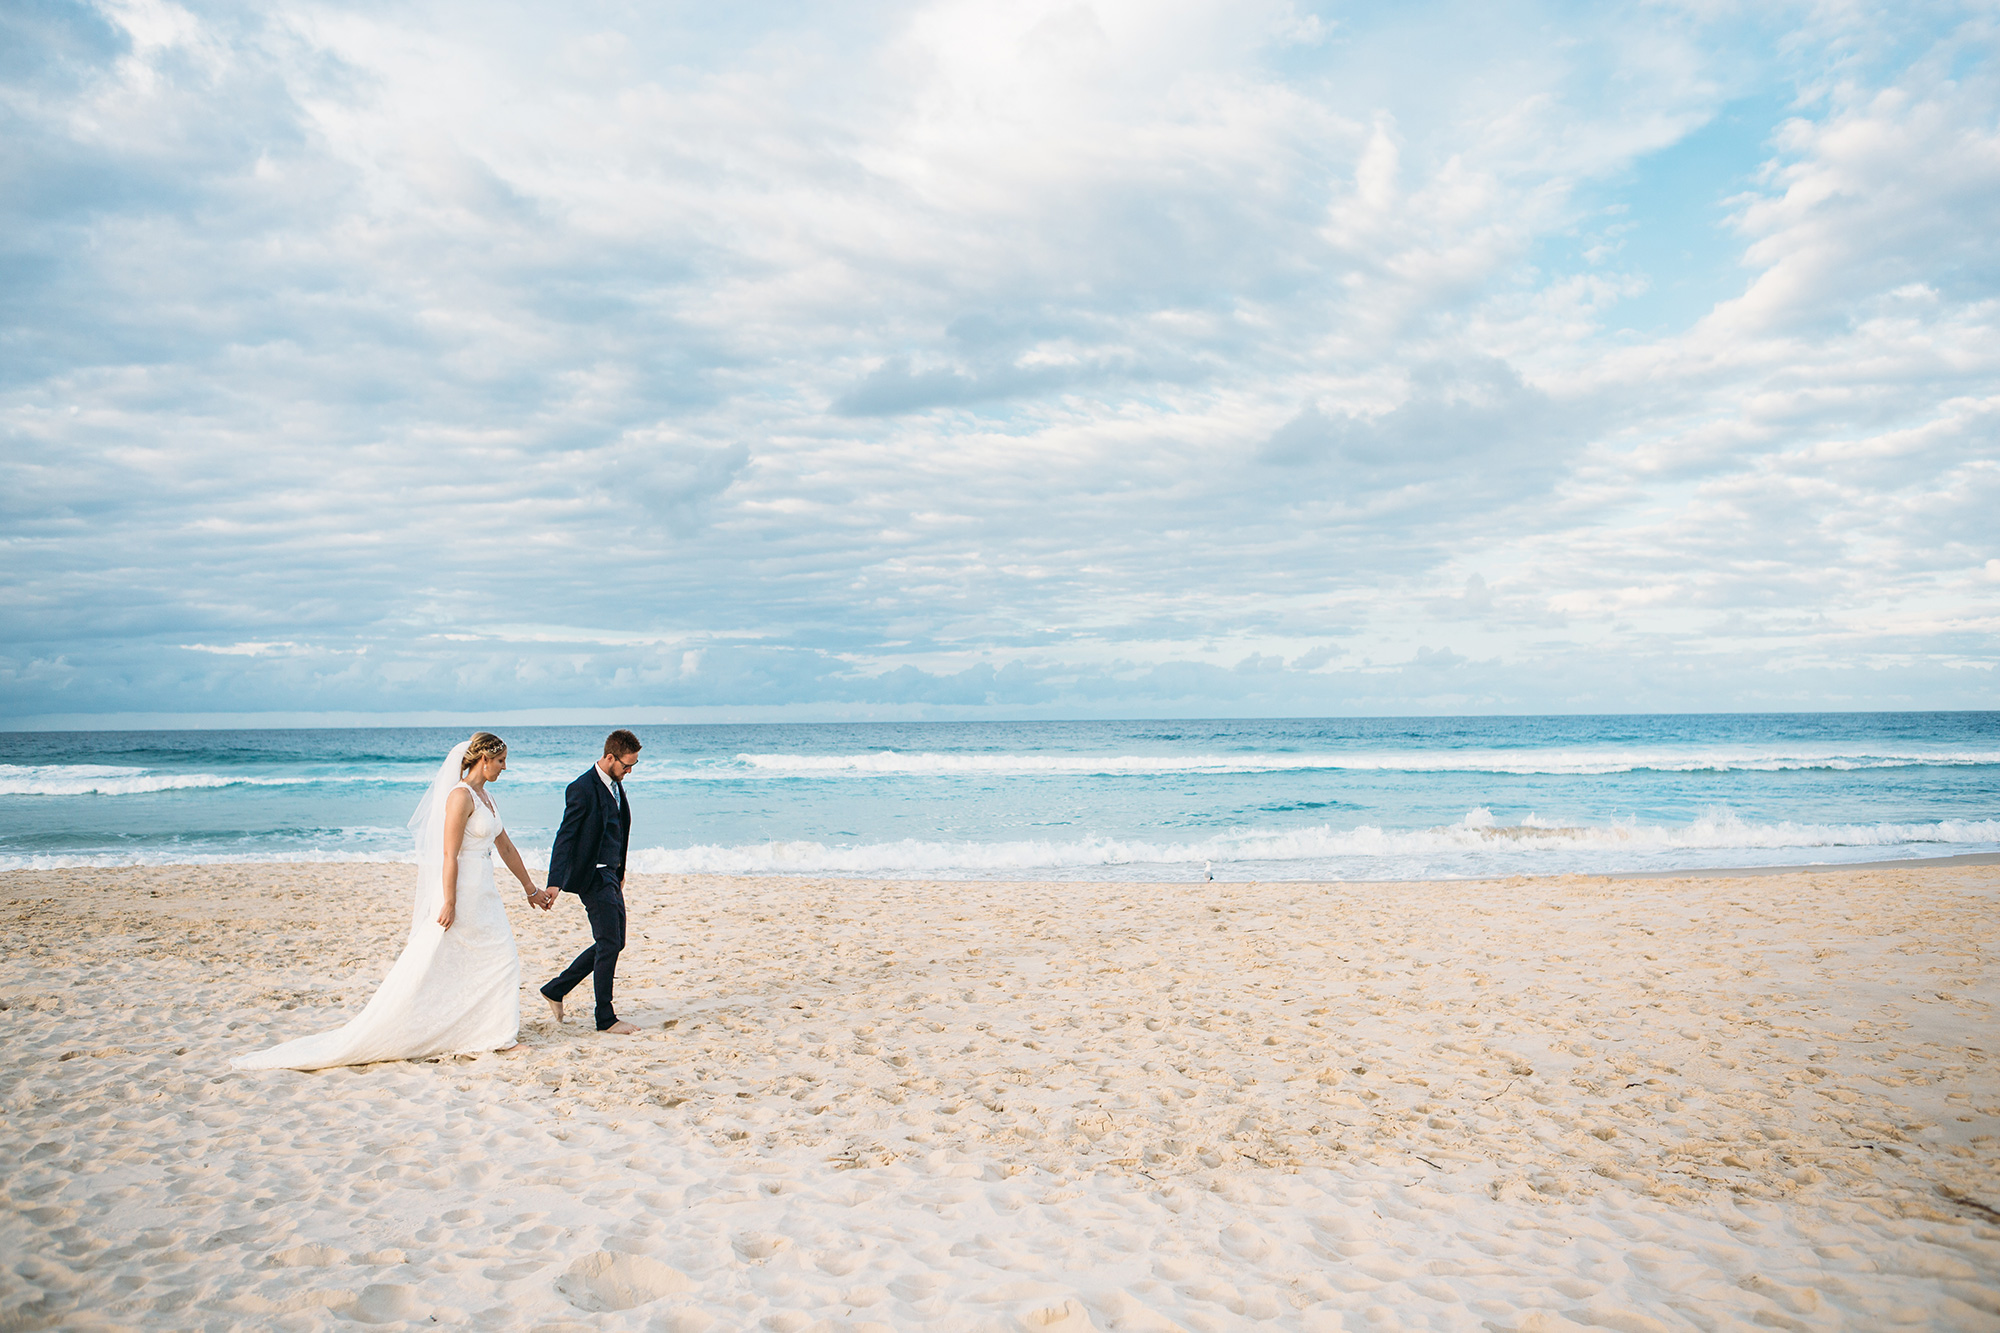 Taryn_Andrew_Vintage-Beach-Wedding_036